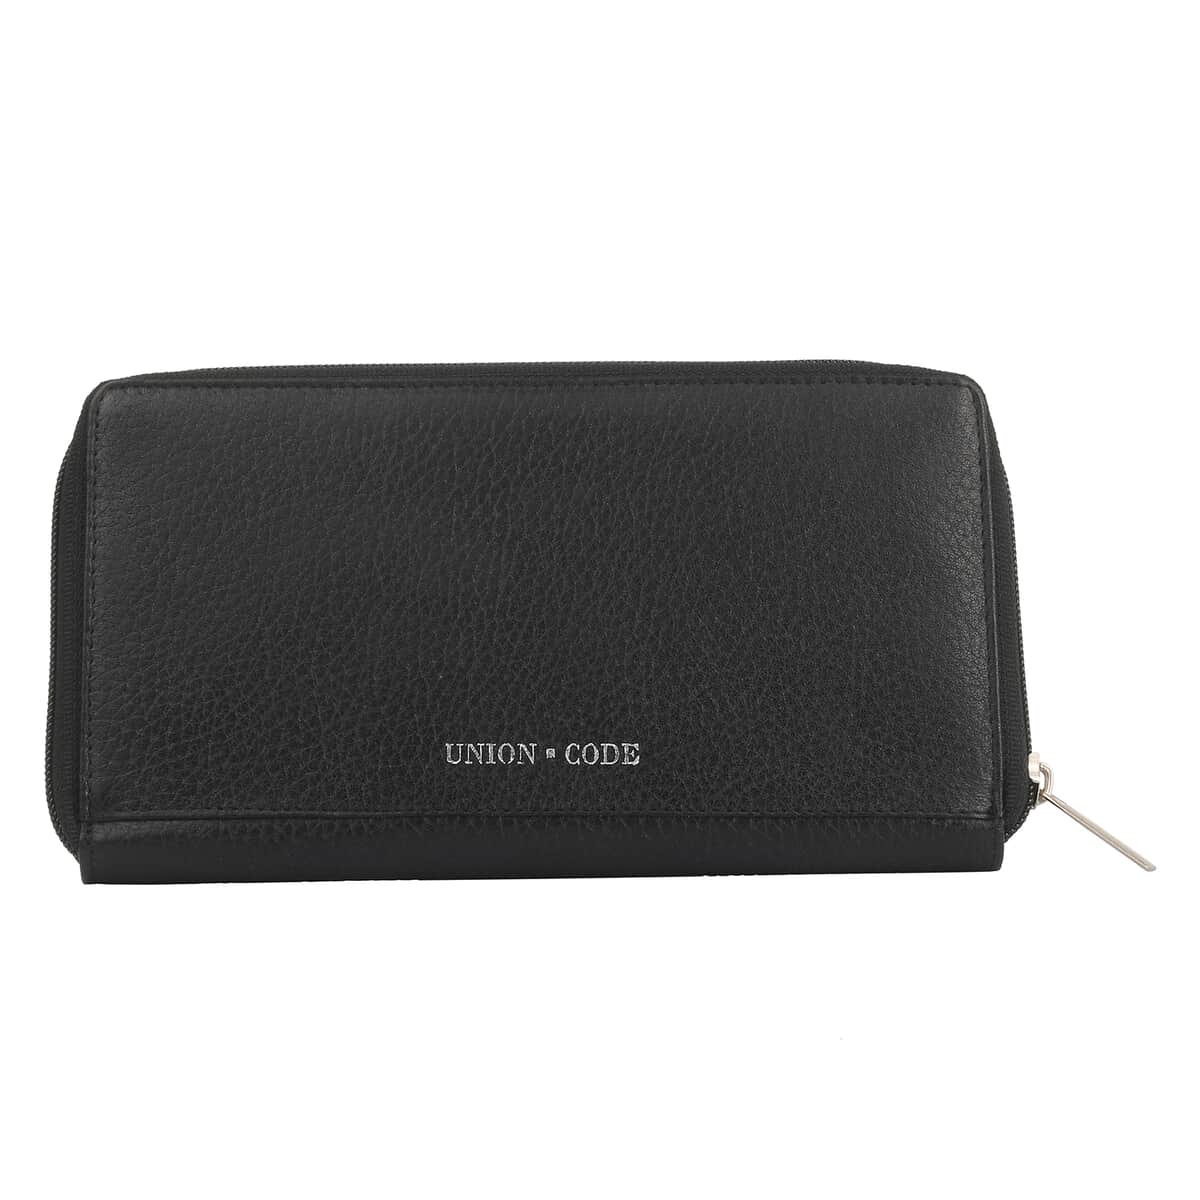 Union Code Black Genuine Leather RFID Women's Wallet image number 4